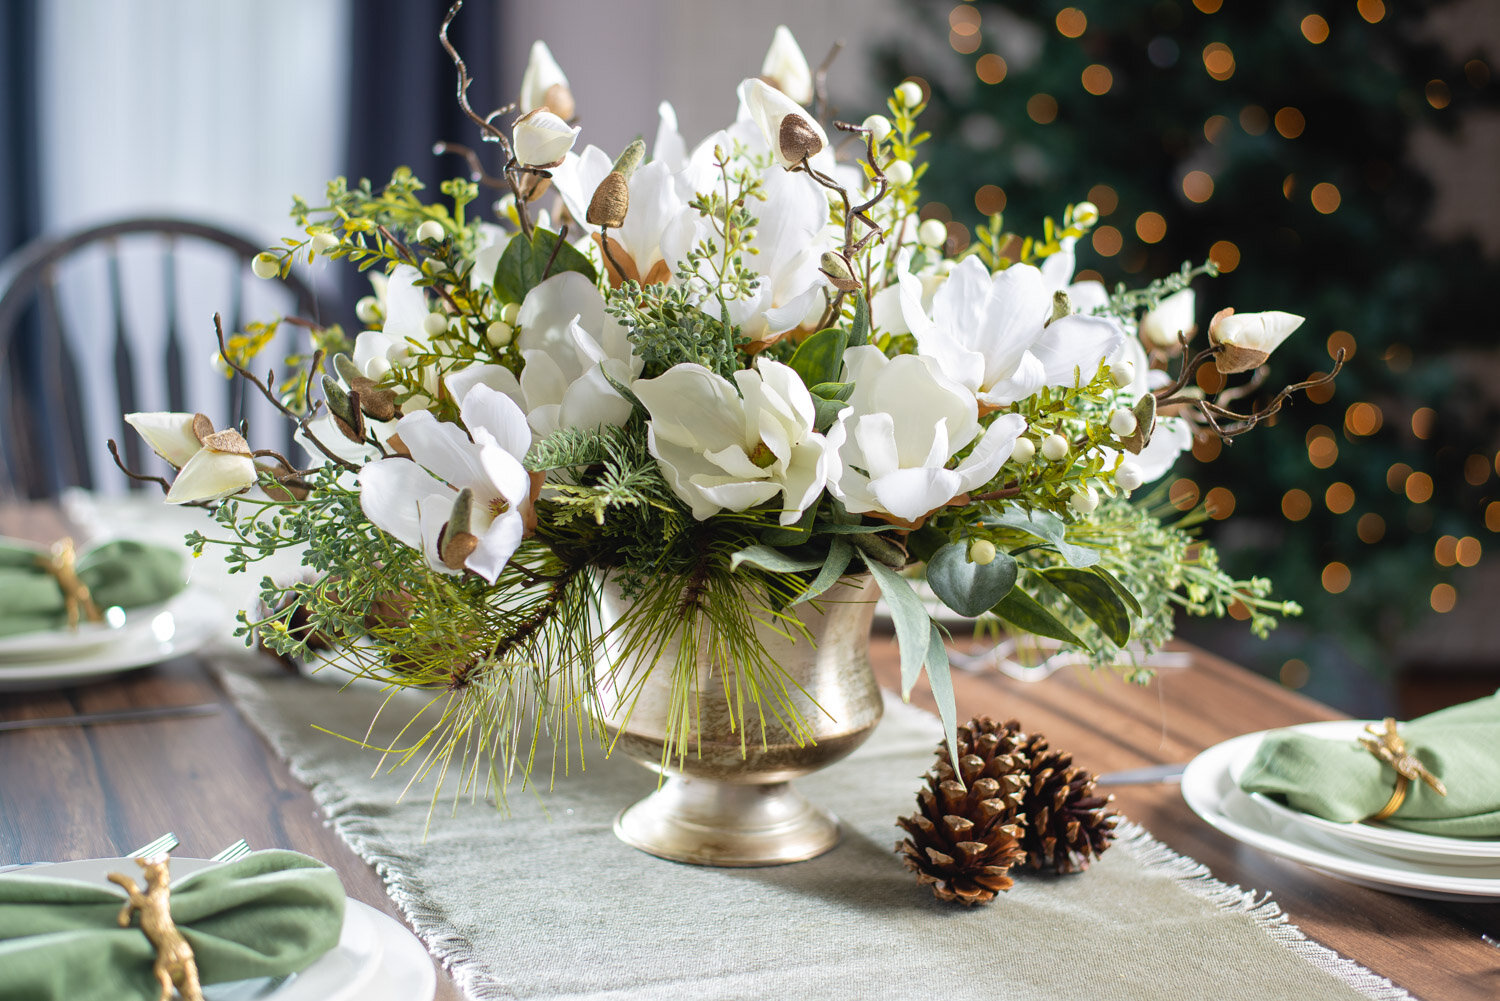 Seasonal Arrangement in Ceramic Vase  Locally Grown Sustainable Flowers –  Molly Oliver Flowers